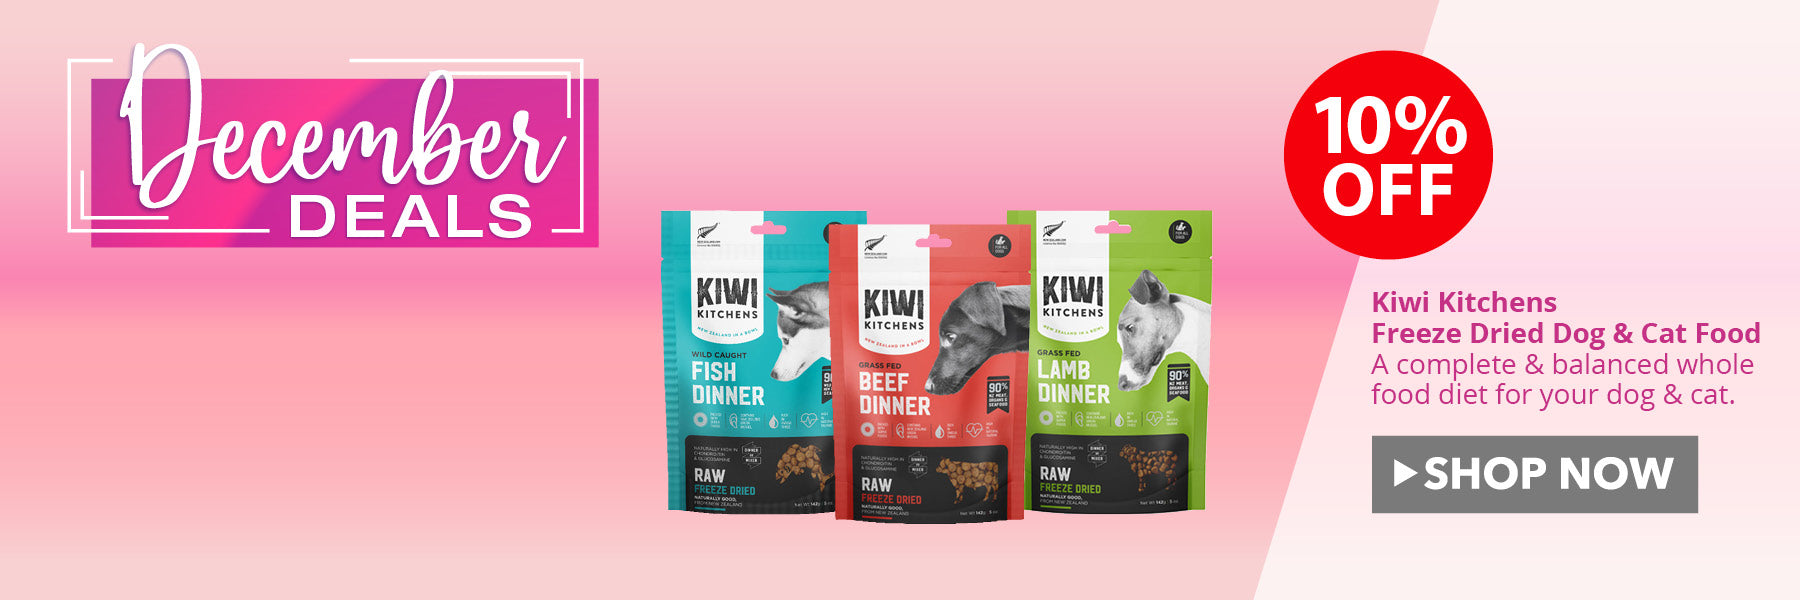 Kiwi Kitchens Freeze Dried Dog & Cat Food ON SALE NOW